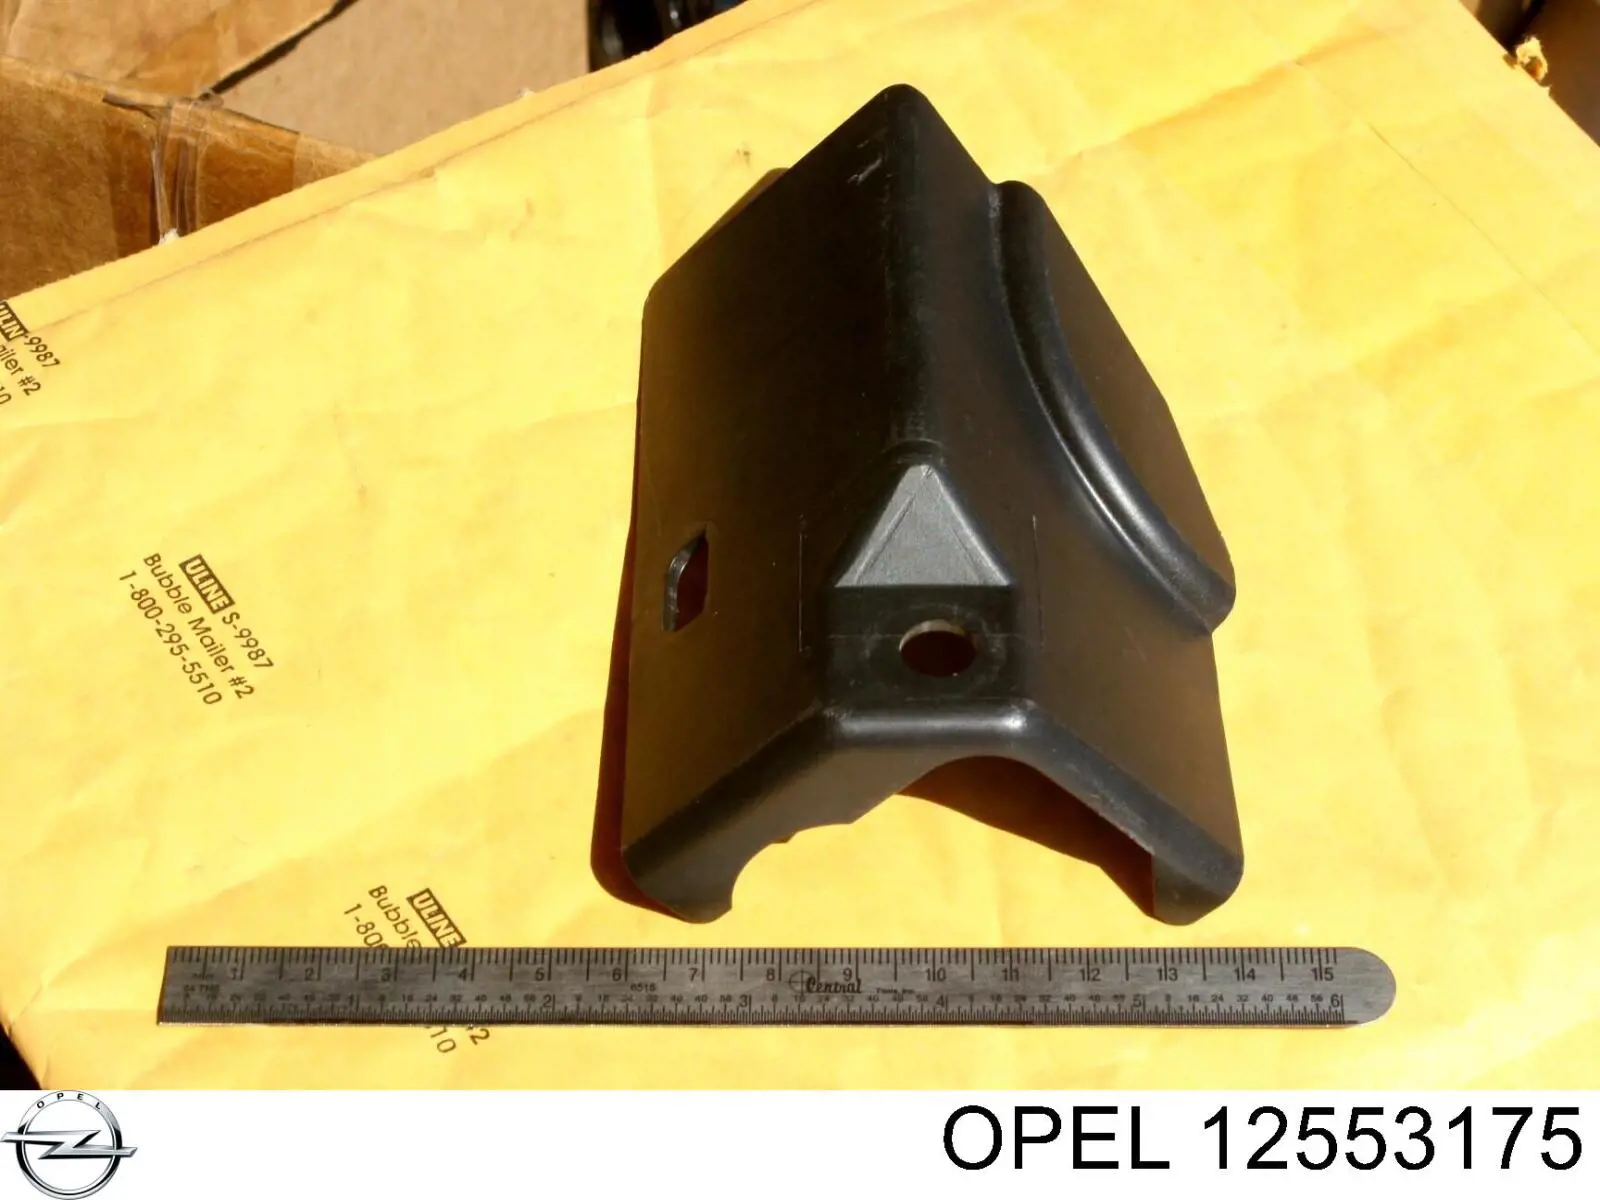 12553175 Opel датчик давления масла